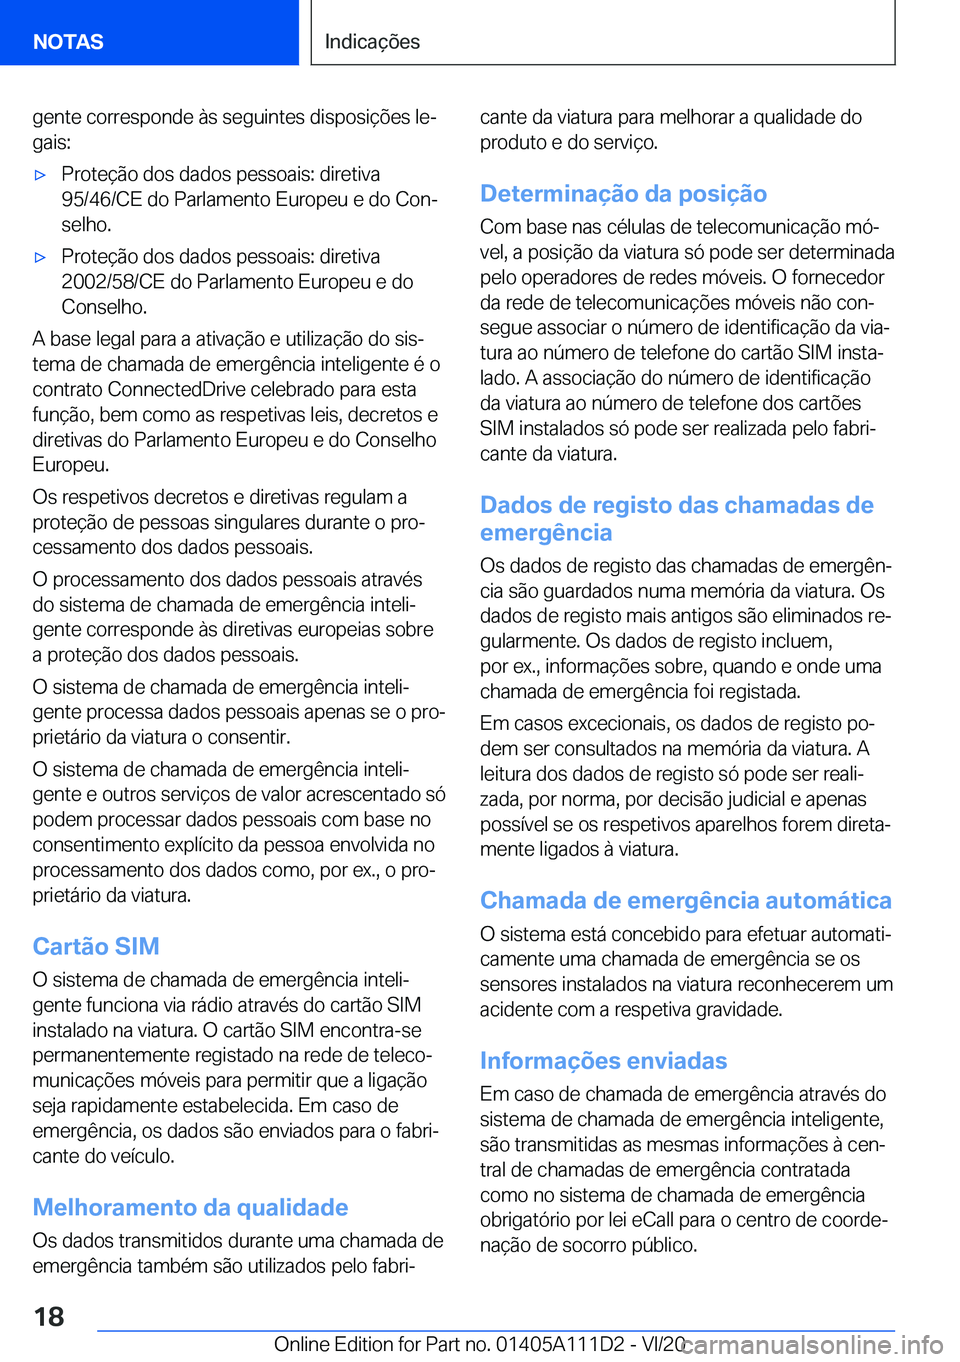 BMW 3 SERIES SEDAN PLUG-IN HYBRID 2021  Manual do condutor (in Portuguese) �g�e�n�t�e��c�o�r�r�e�s�p�o�n�d�e��à�s��s�e�g�u�i�n�t�e�s��d�i�s�p�o�s�i�